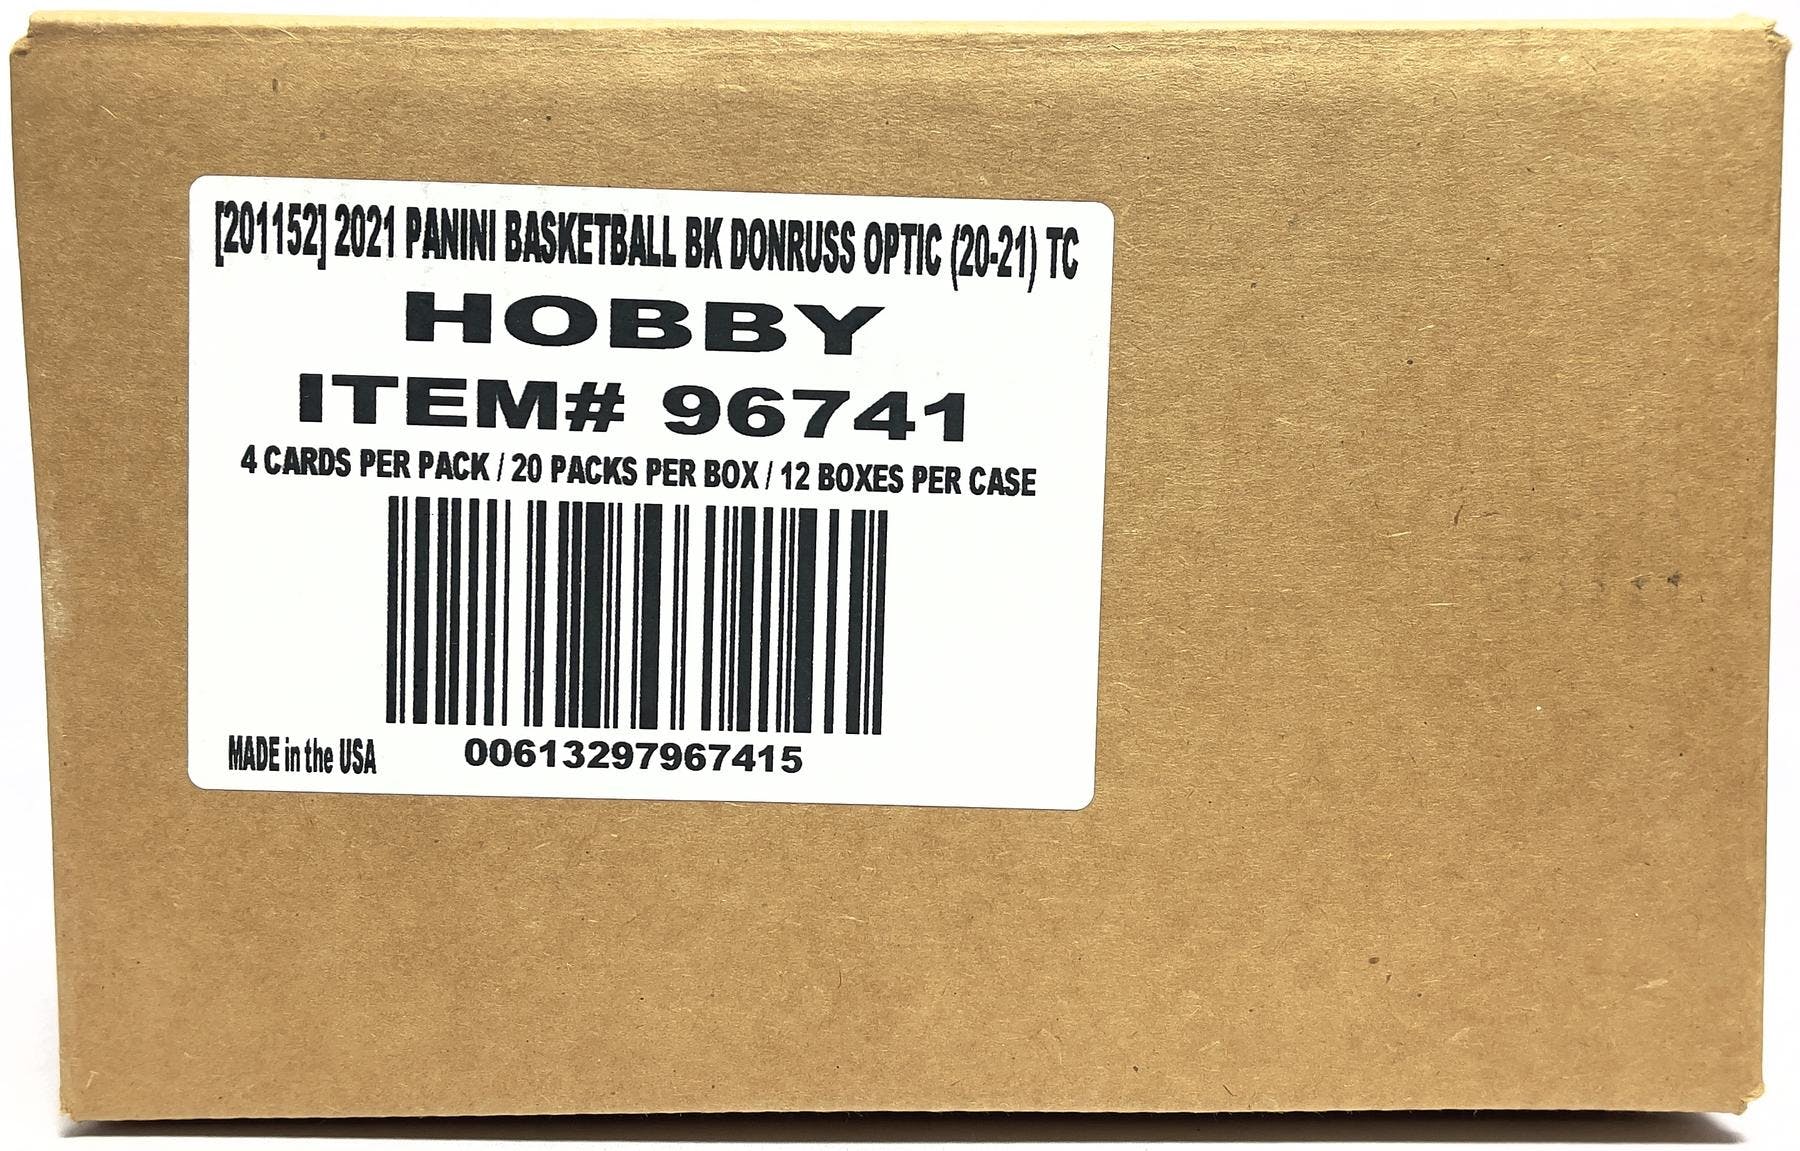 2020-2021 Panini Donruss Optic Basketball Hobby 12 Box Case